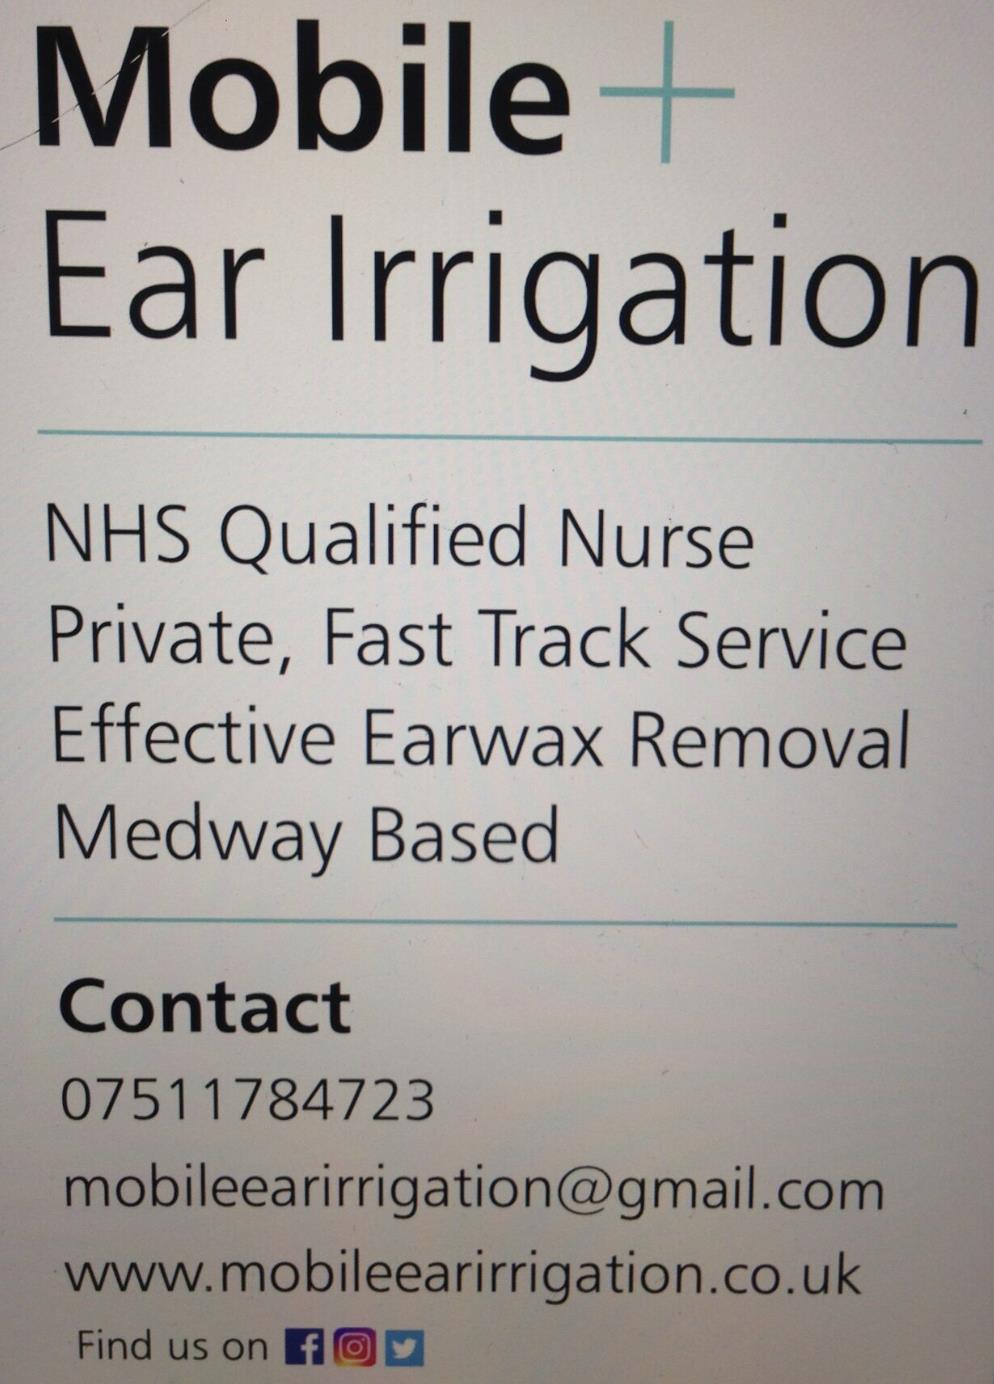 Mobile Ear Irrigation